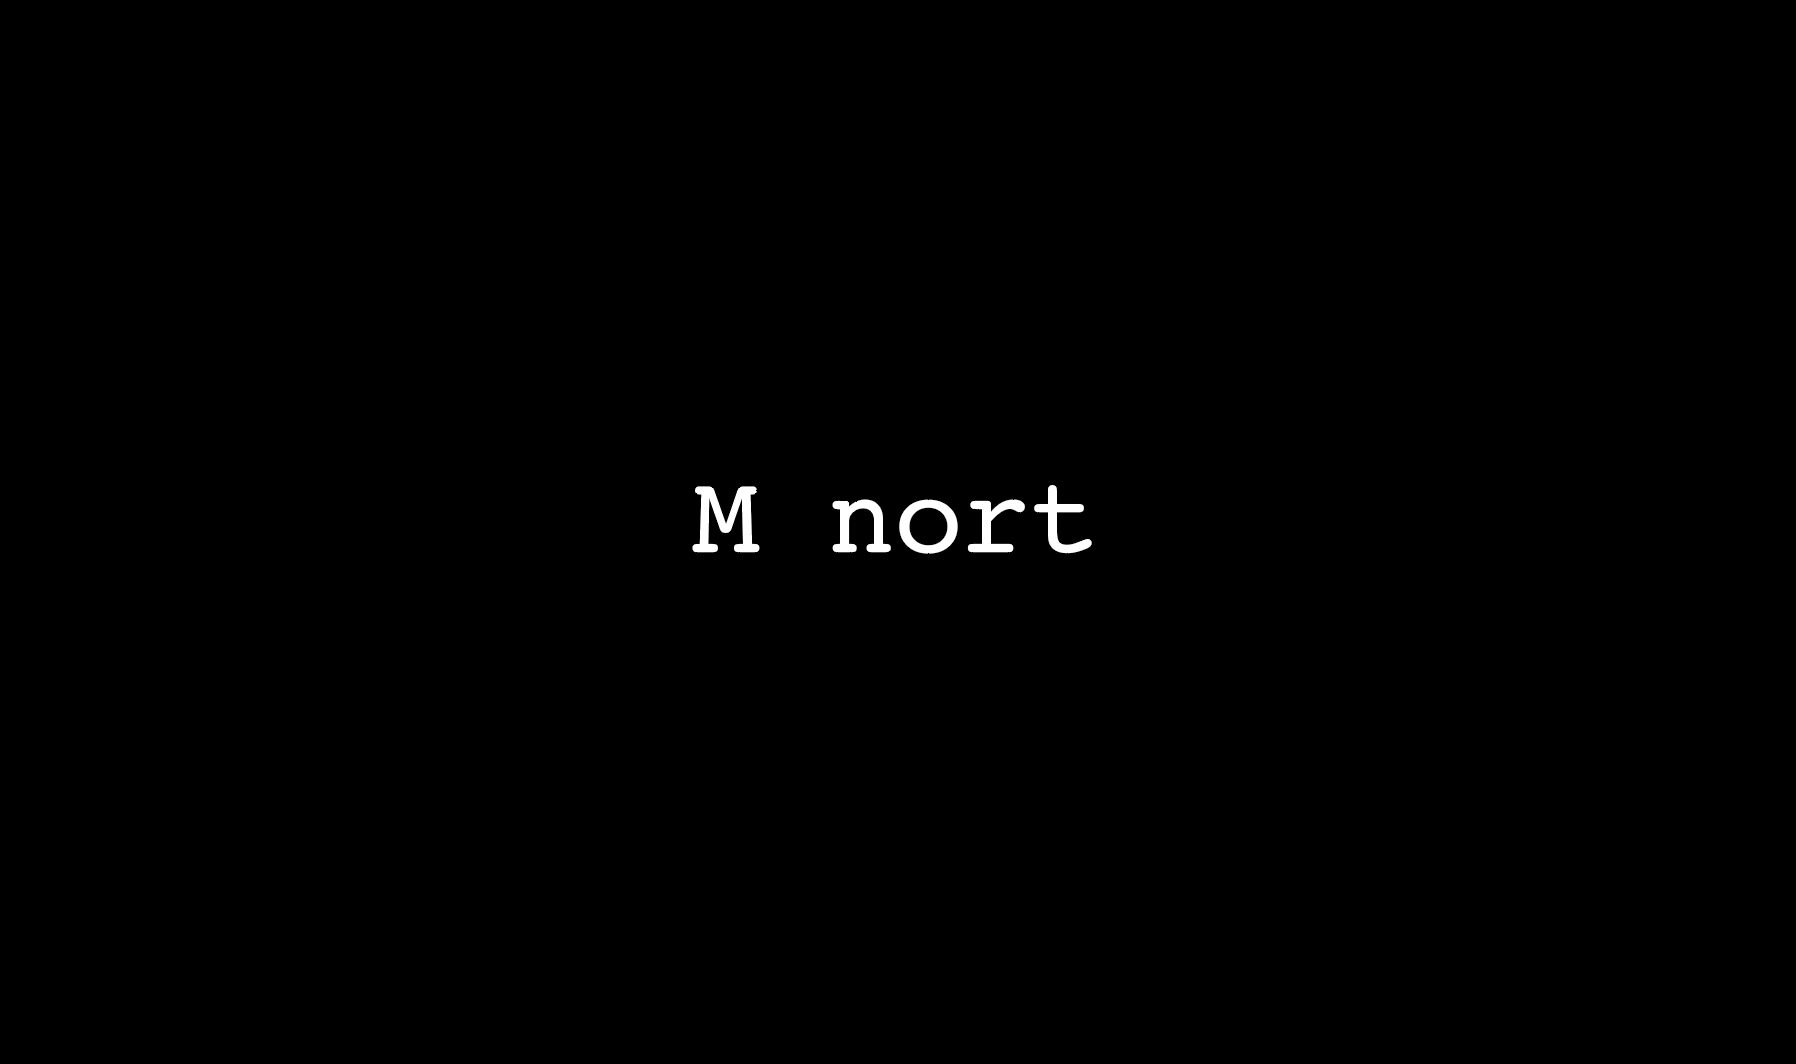 M nort by Mai Watanabe